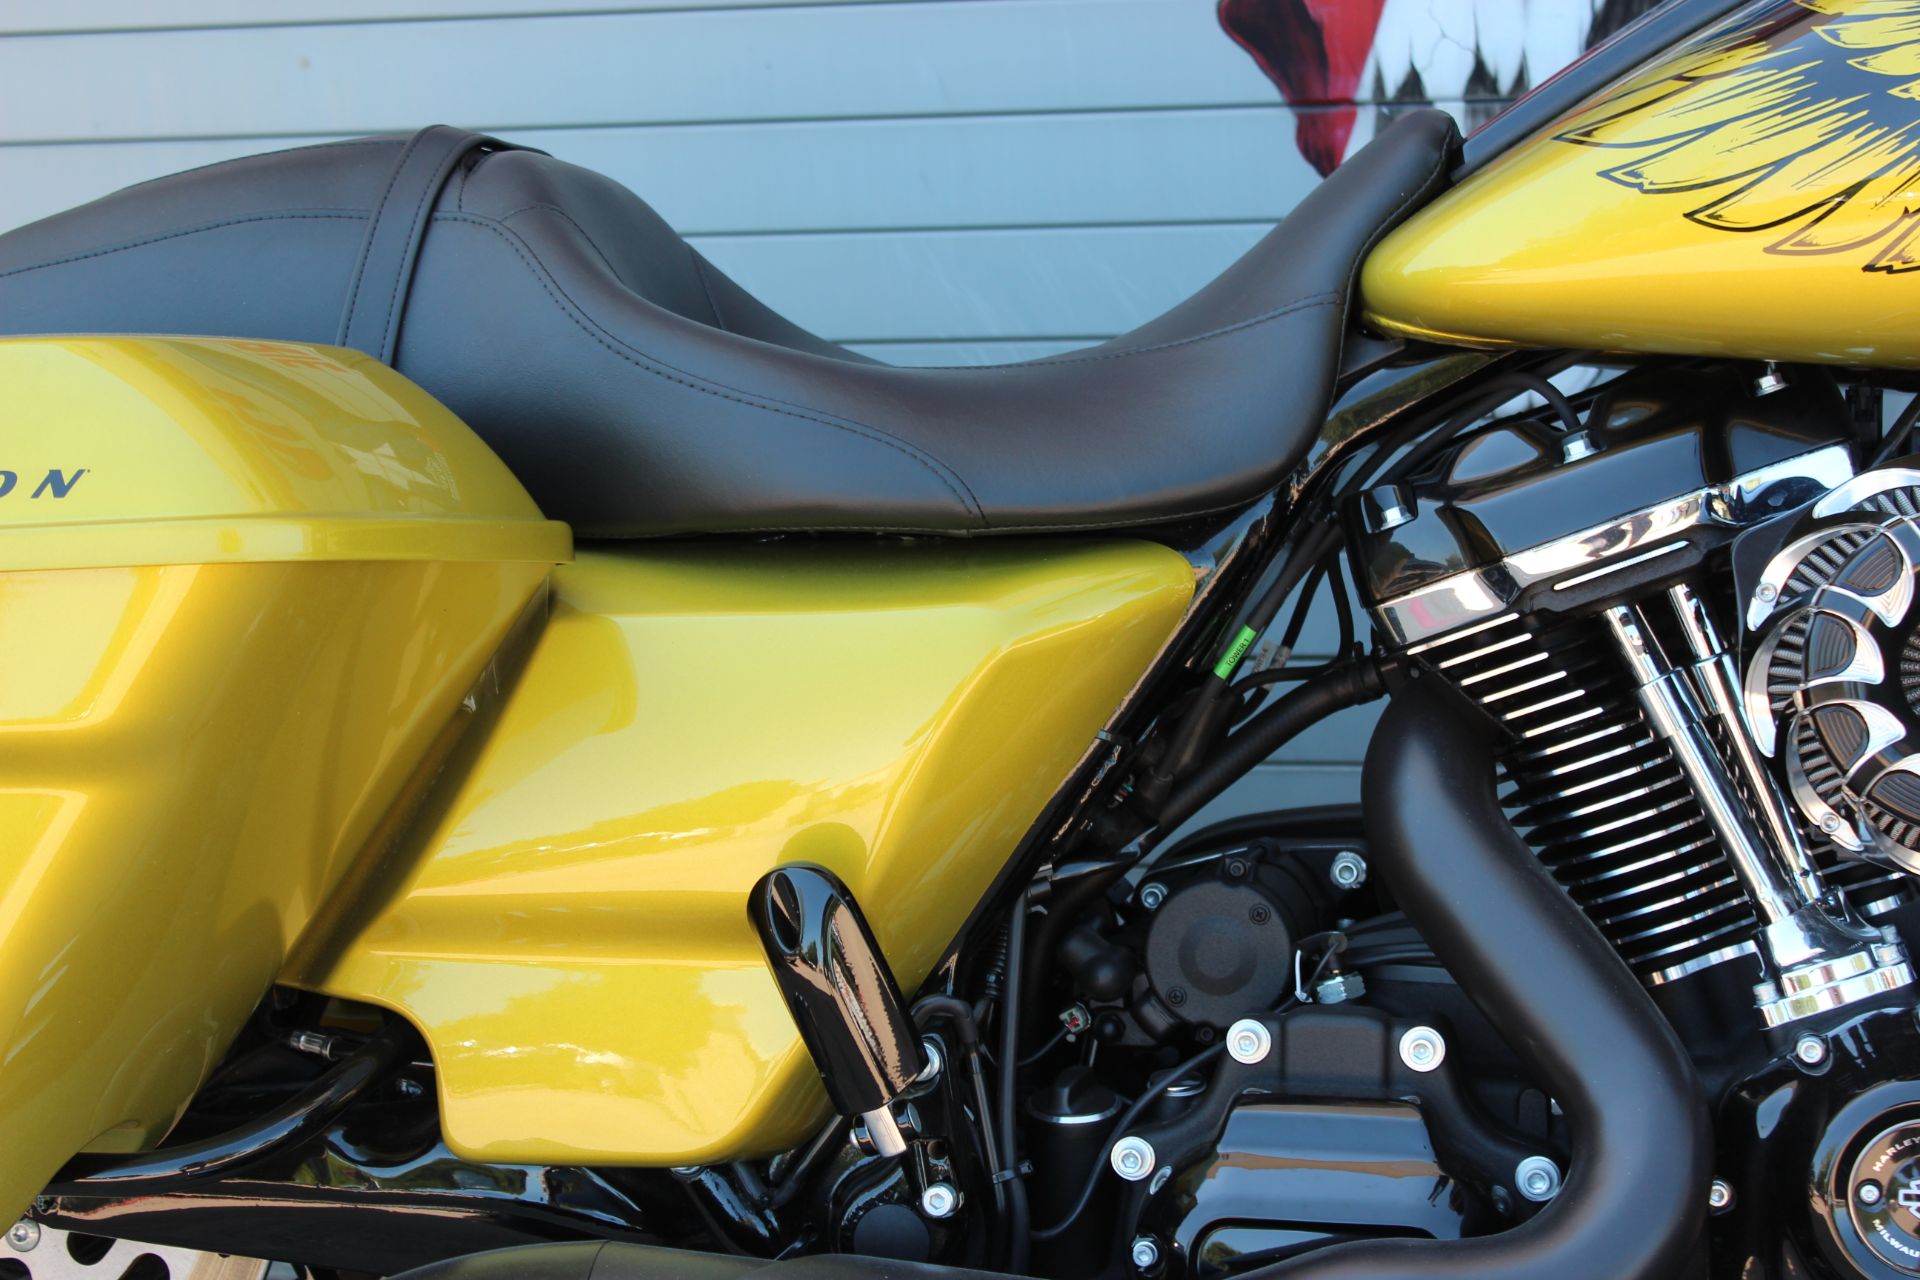 2020 Harley-Davidson Road Glide® Special in Grand Prairie, Texas - Photo 8